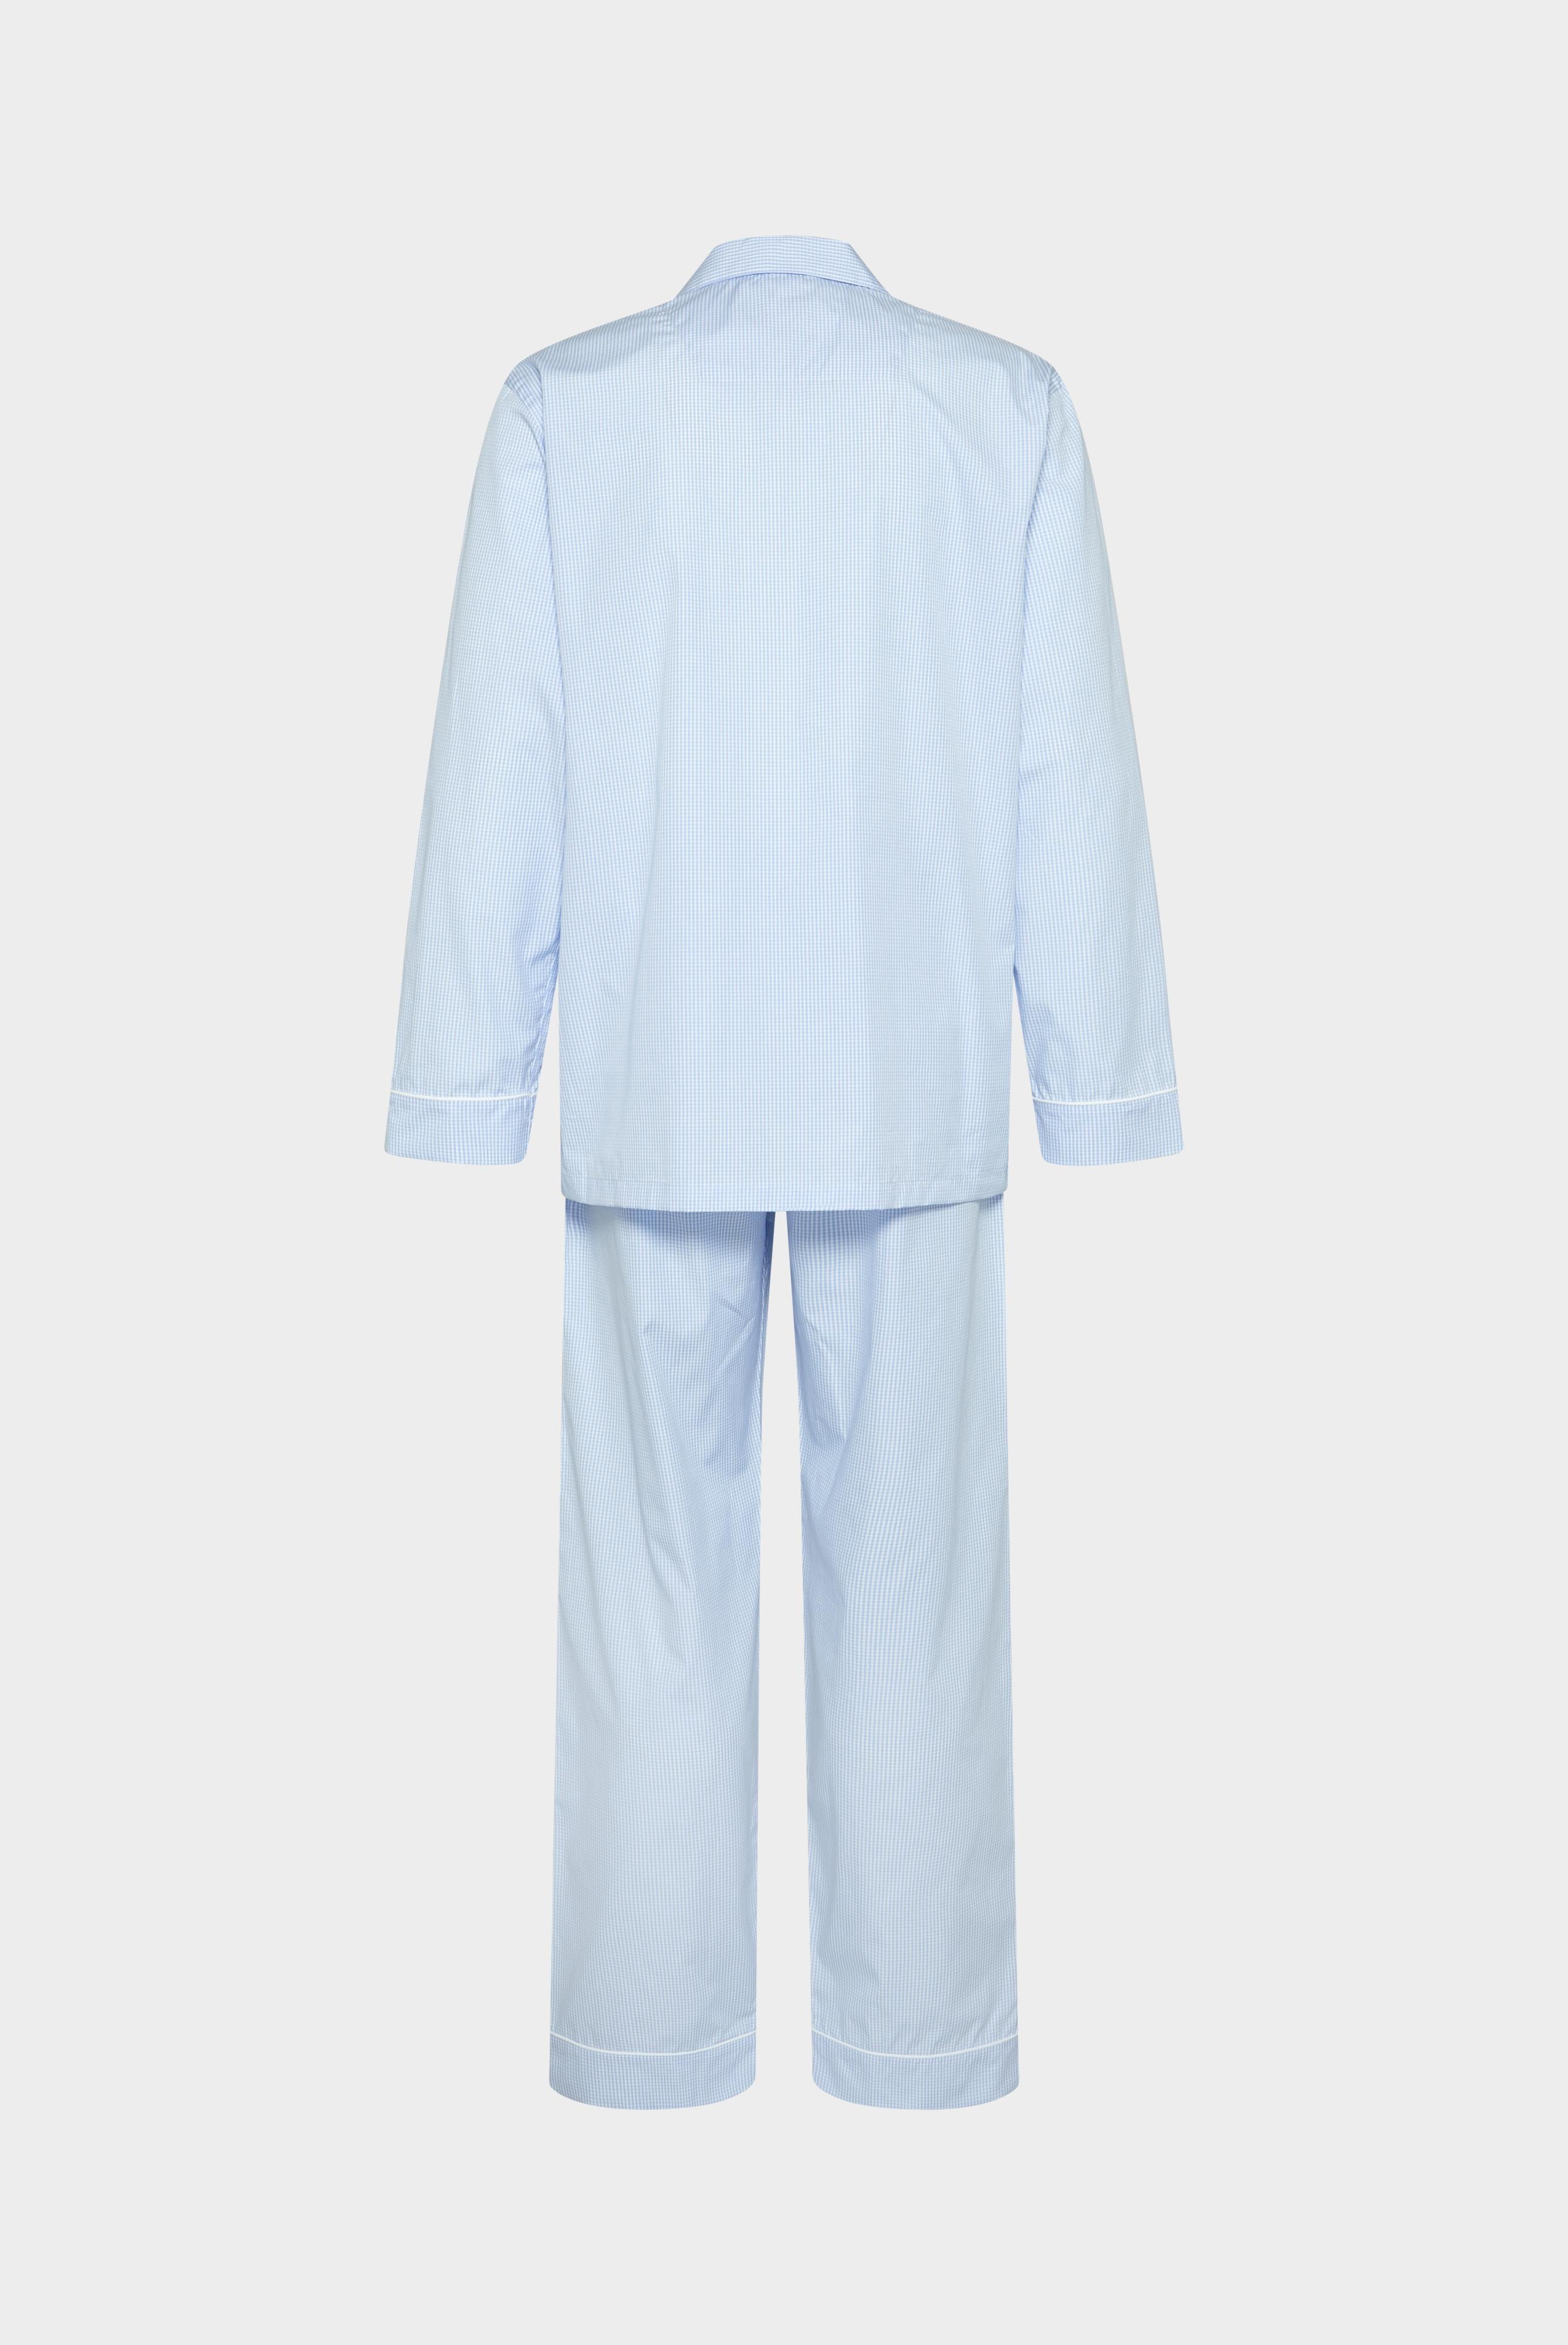 Pyjamas+Schlafanzug aus Popeline Gestreift+91.1139.UK.141787.720.46